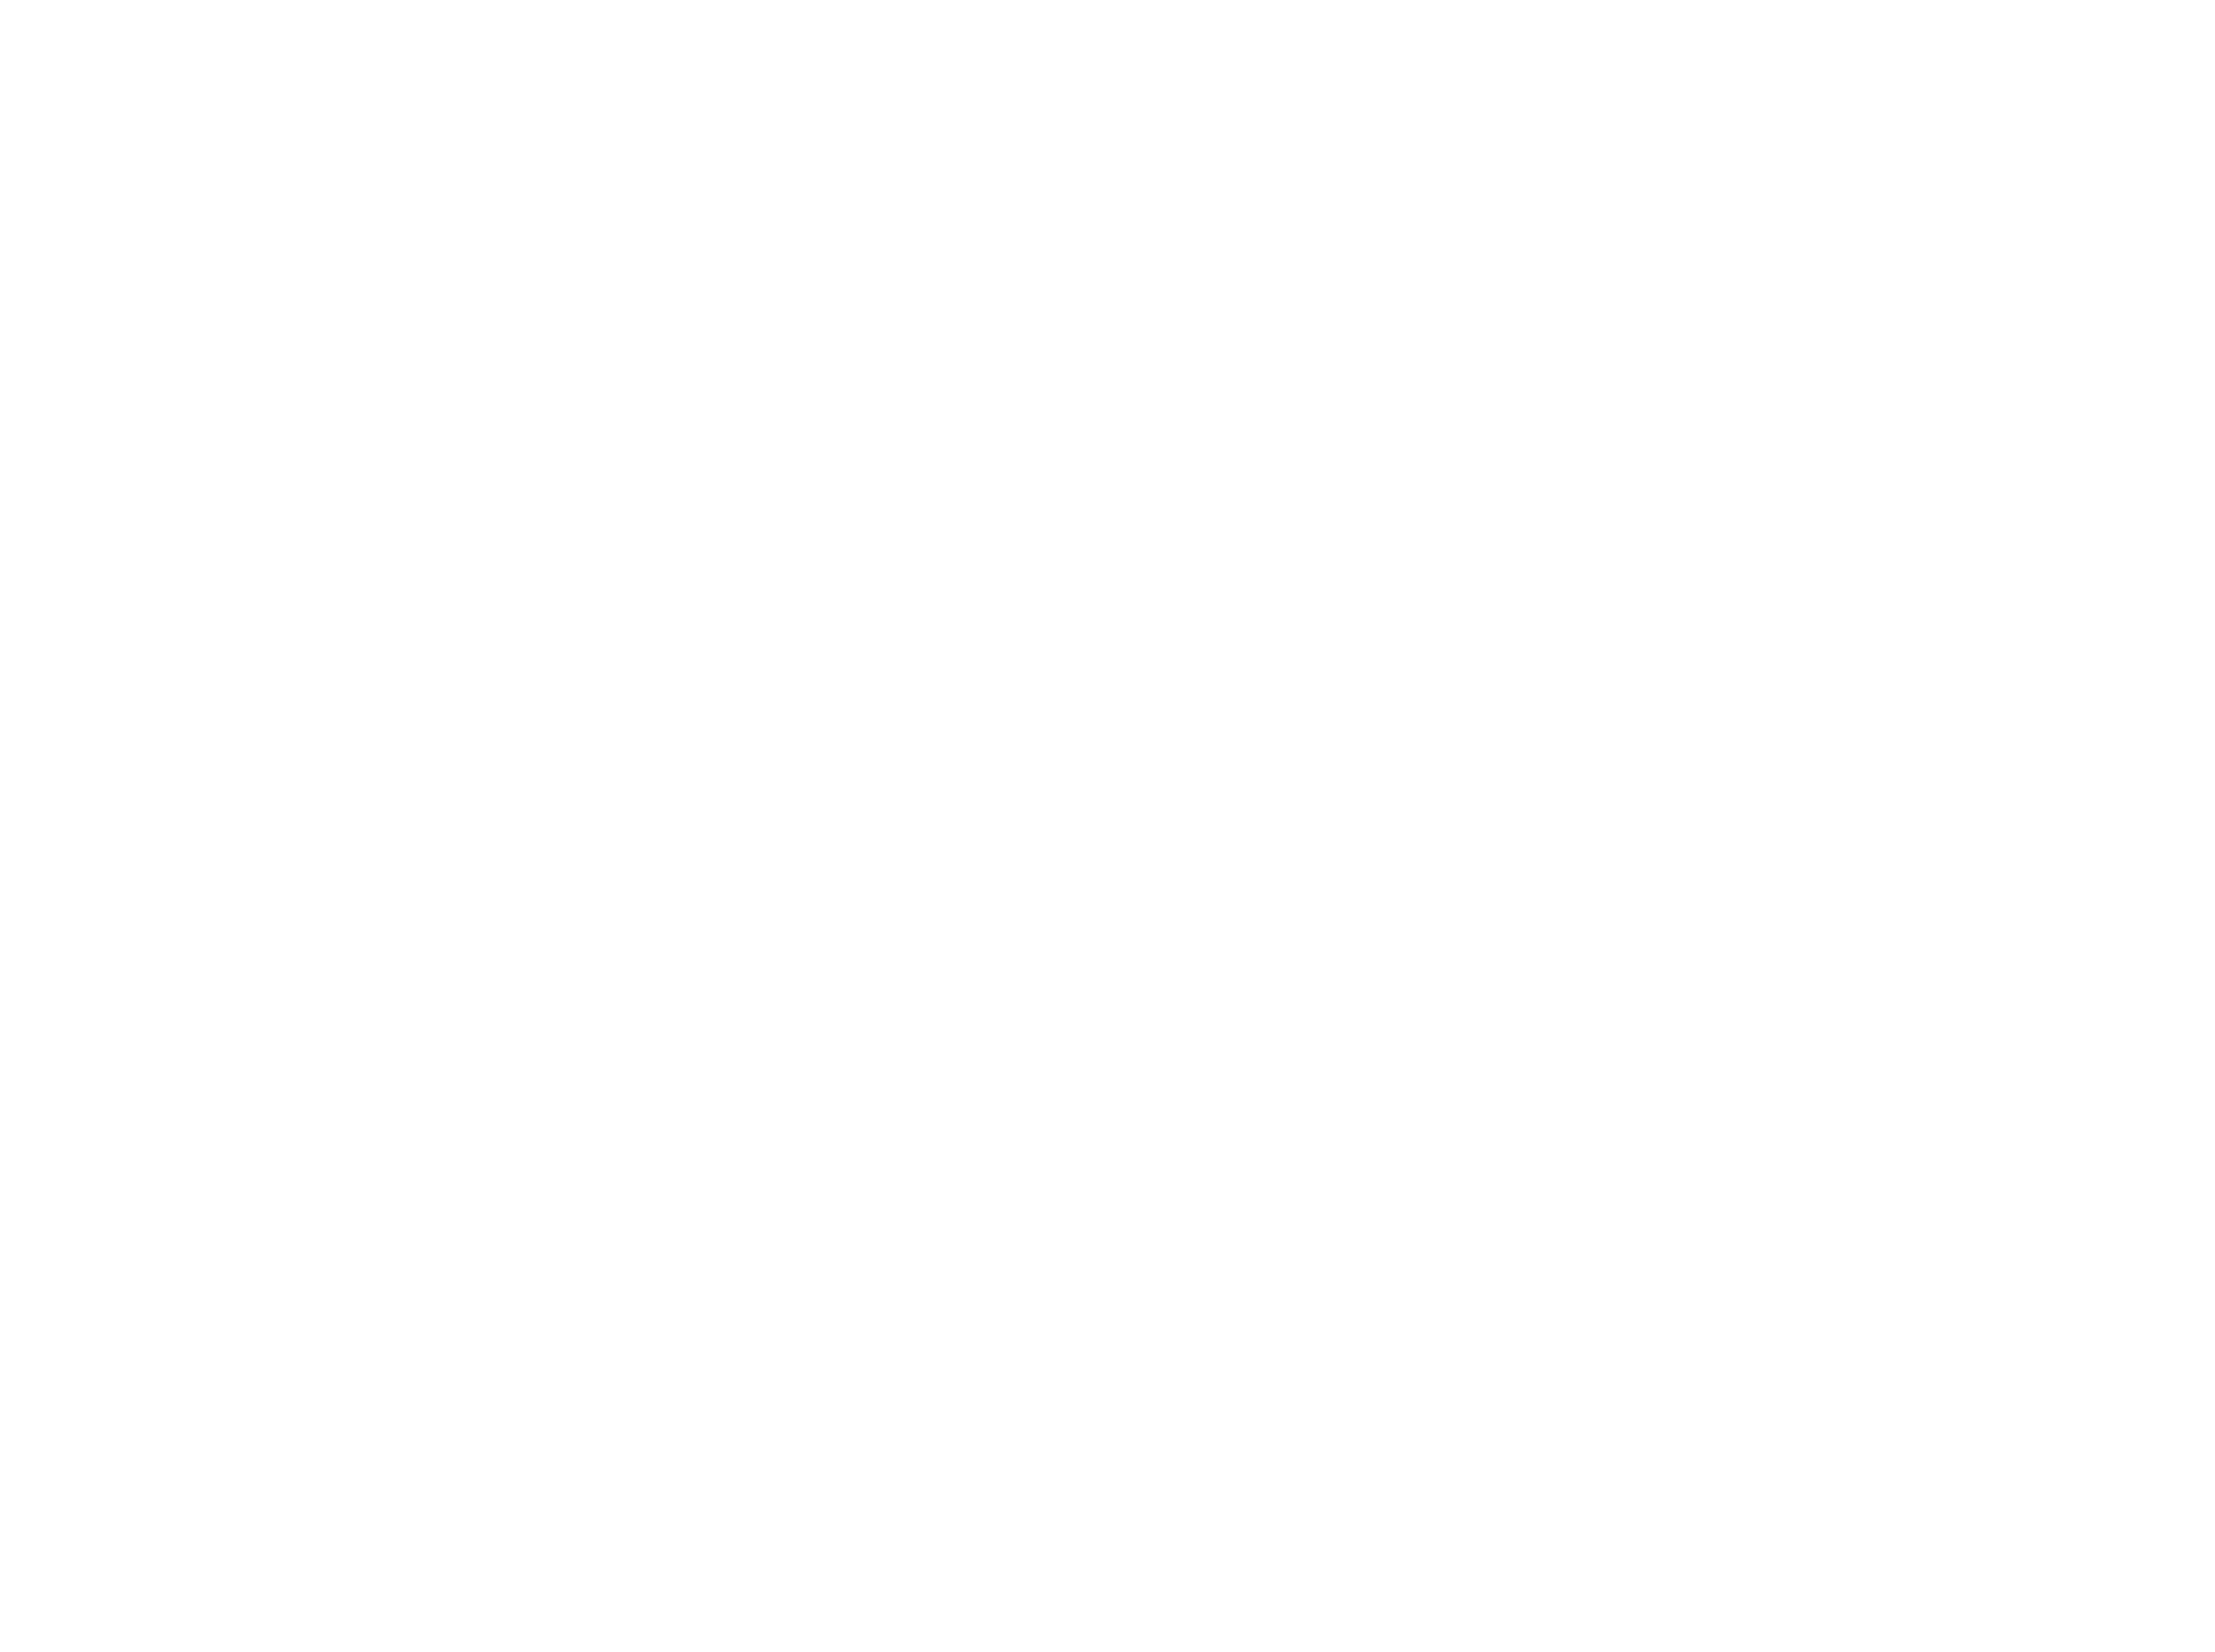 THE LYNX Μountain Resort